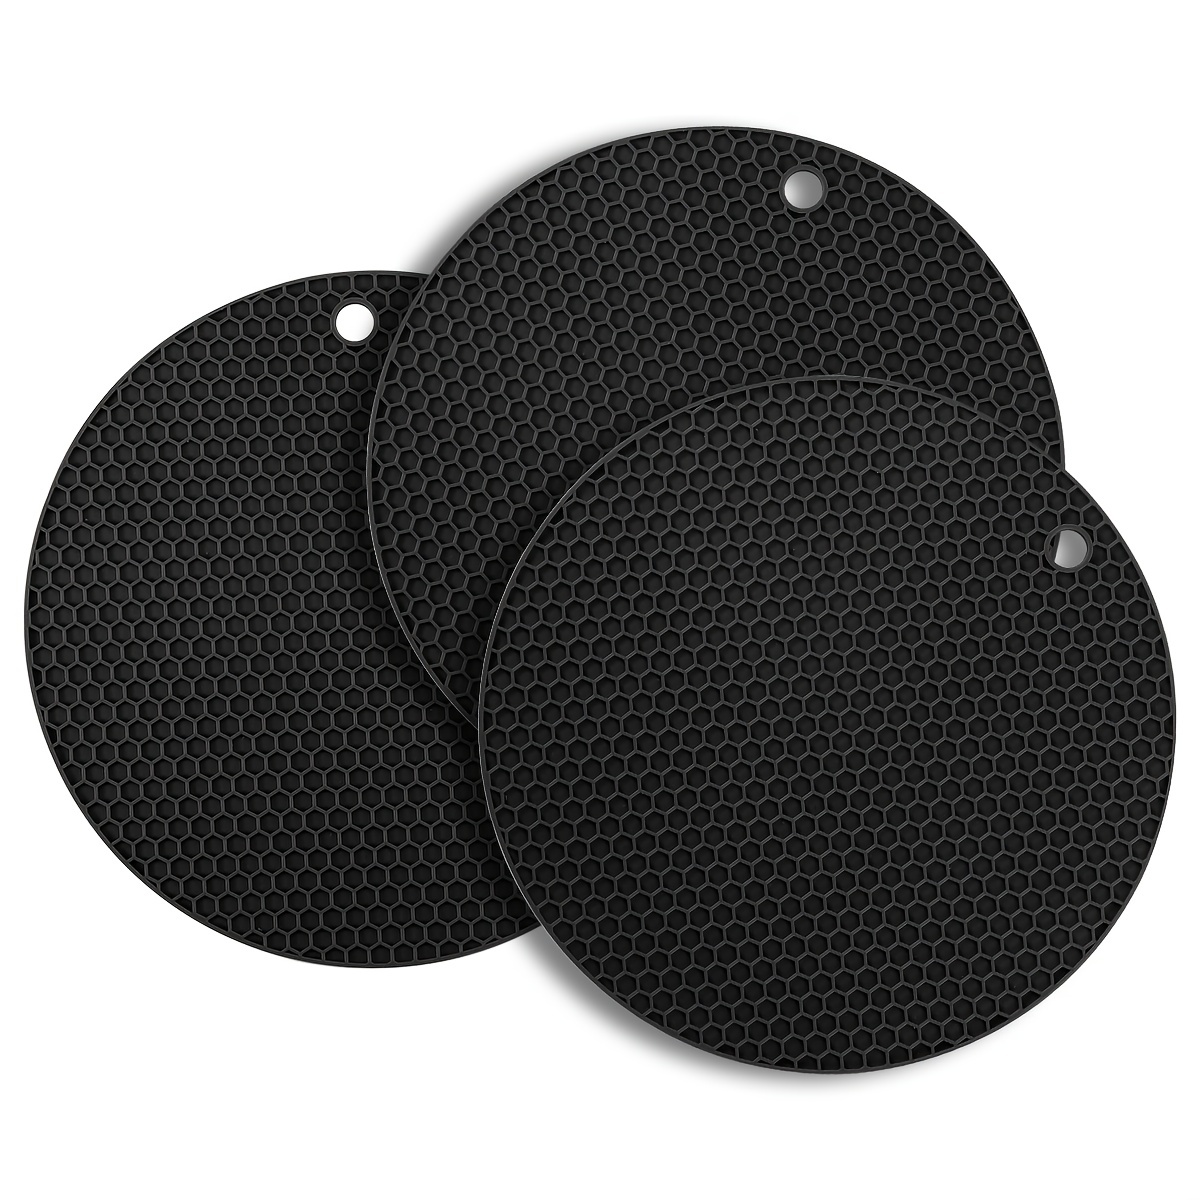 3pcs Non-Slip Heat Proof Mat With 3pcs Felt Coaster For Drinks, Heat  Resistant Mat For Air Fryer